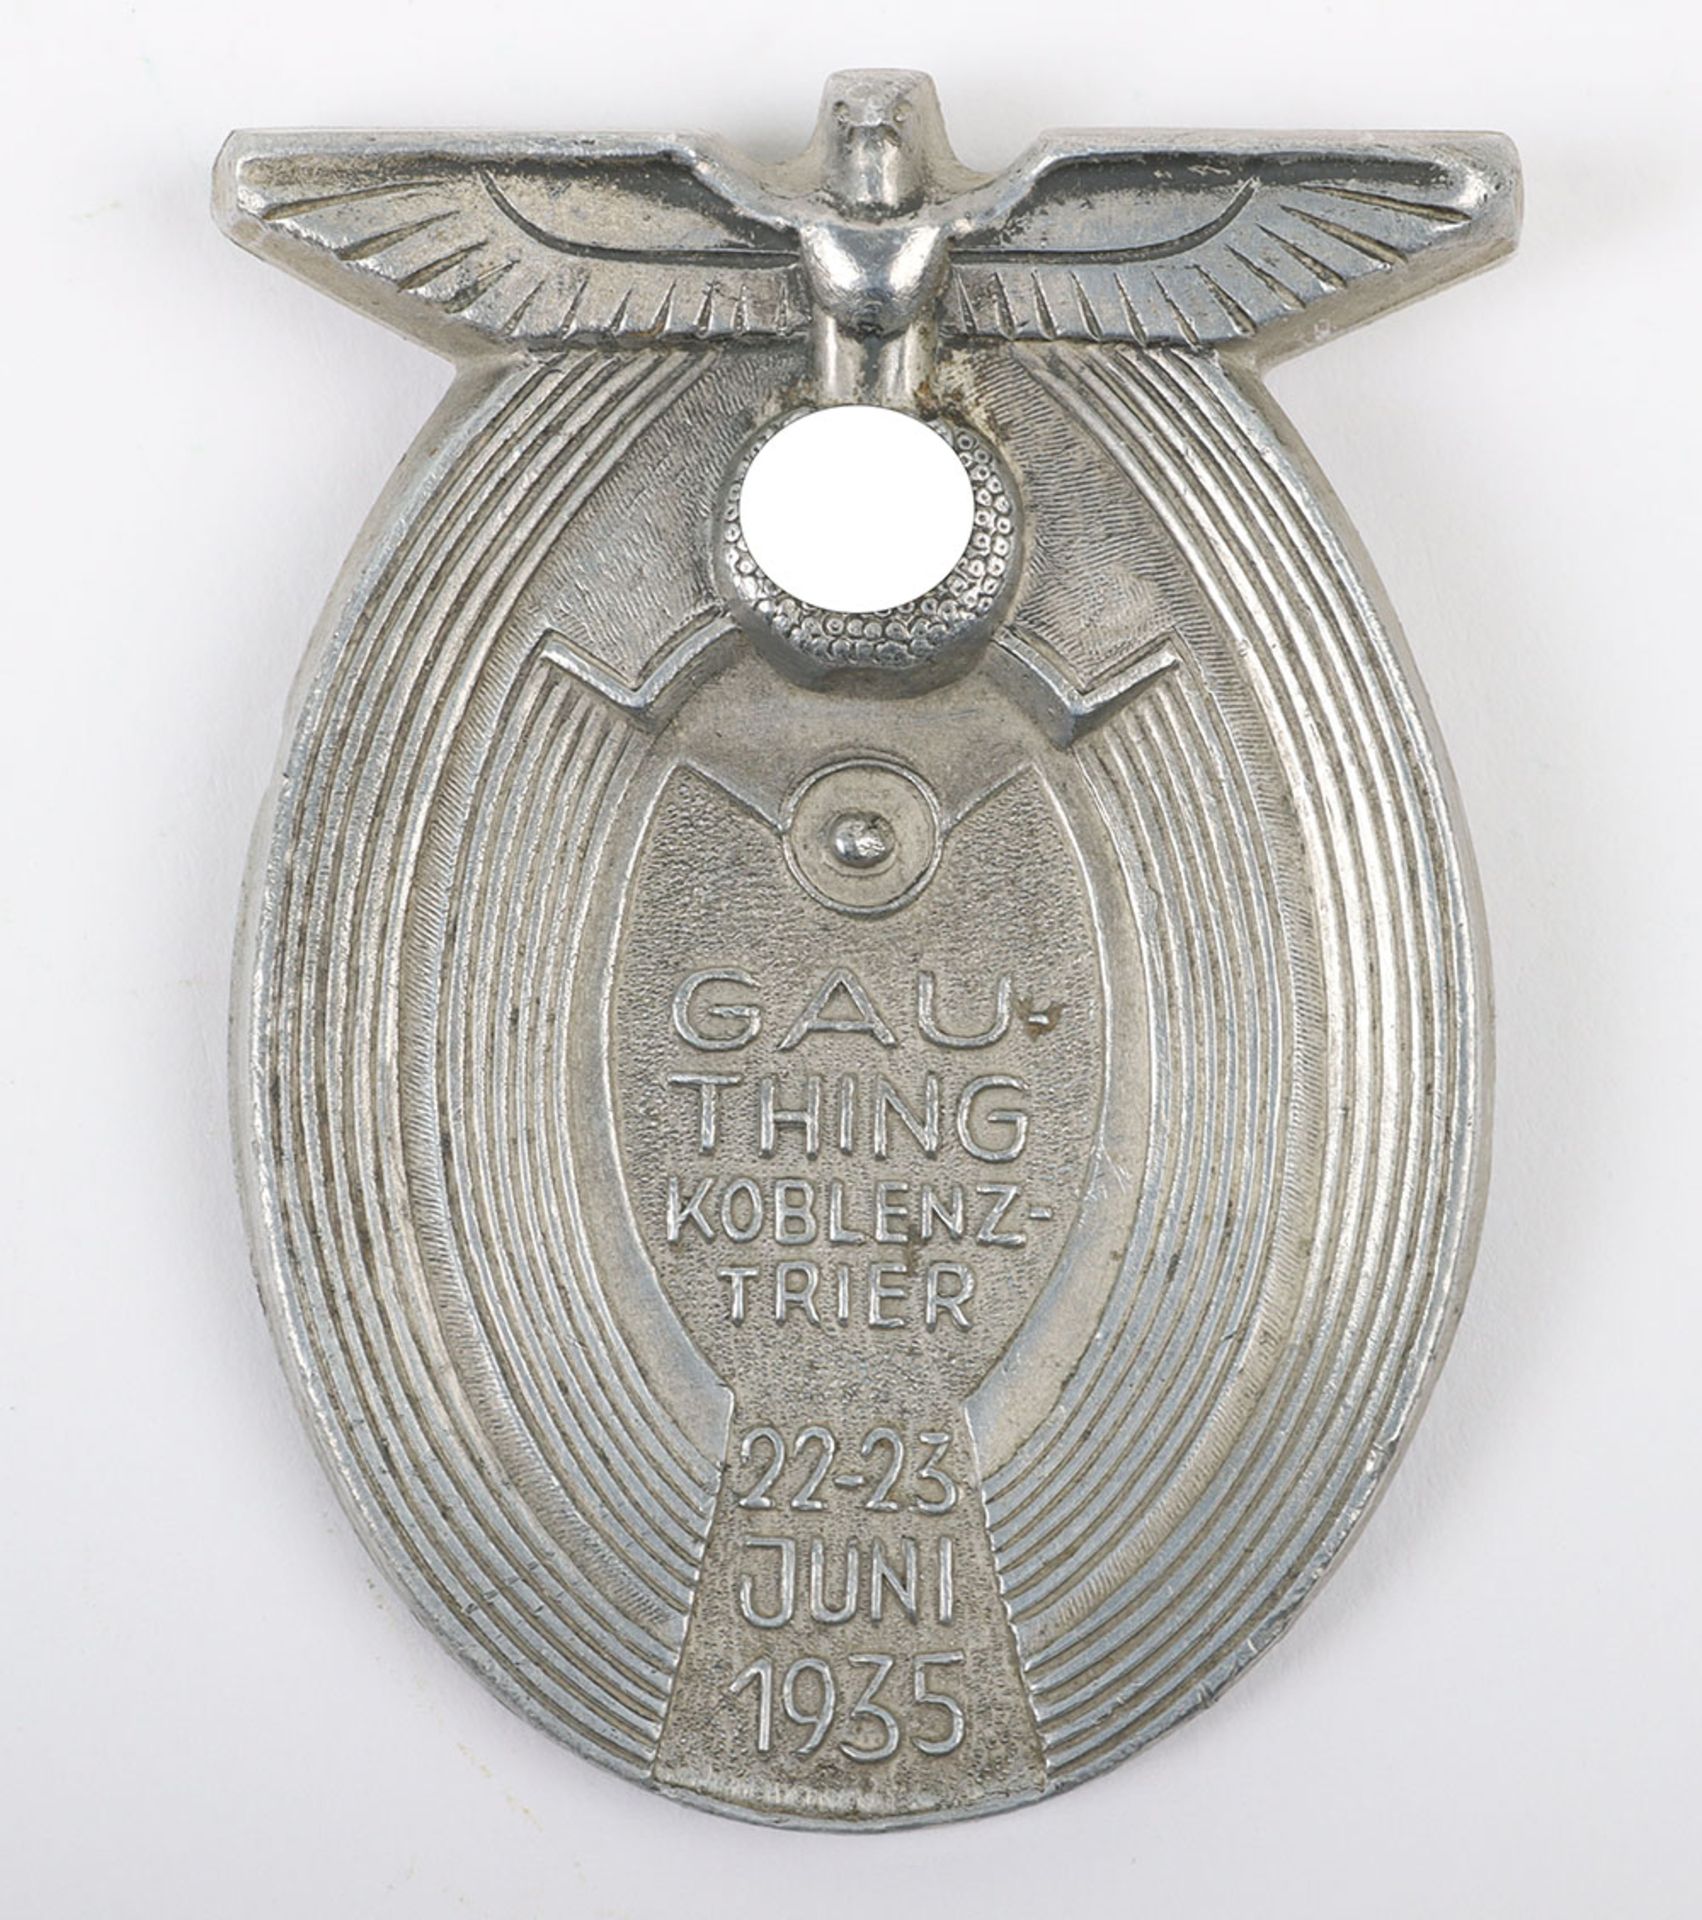 Third Reich Gau-Thing Koblenz-Trier 1935 Day Badge